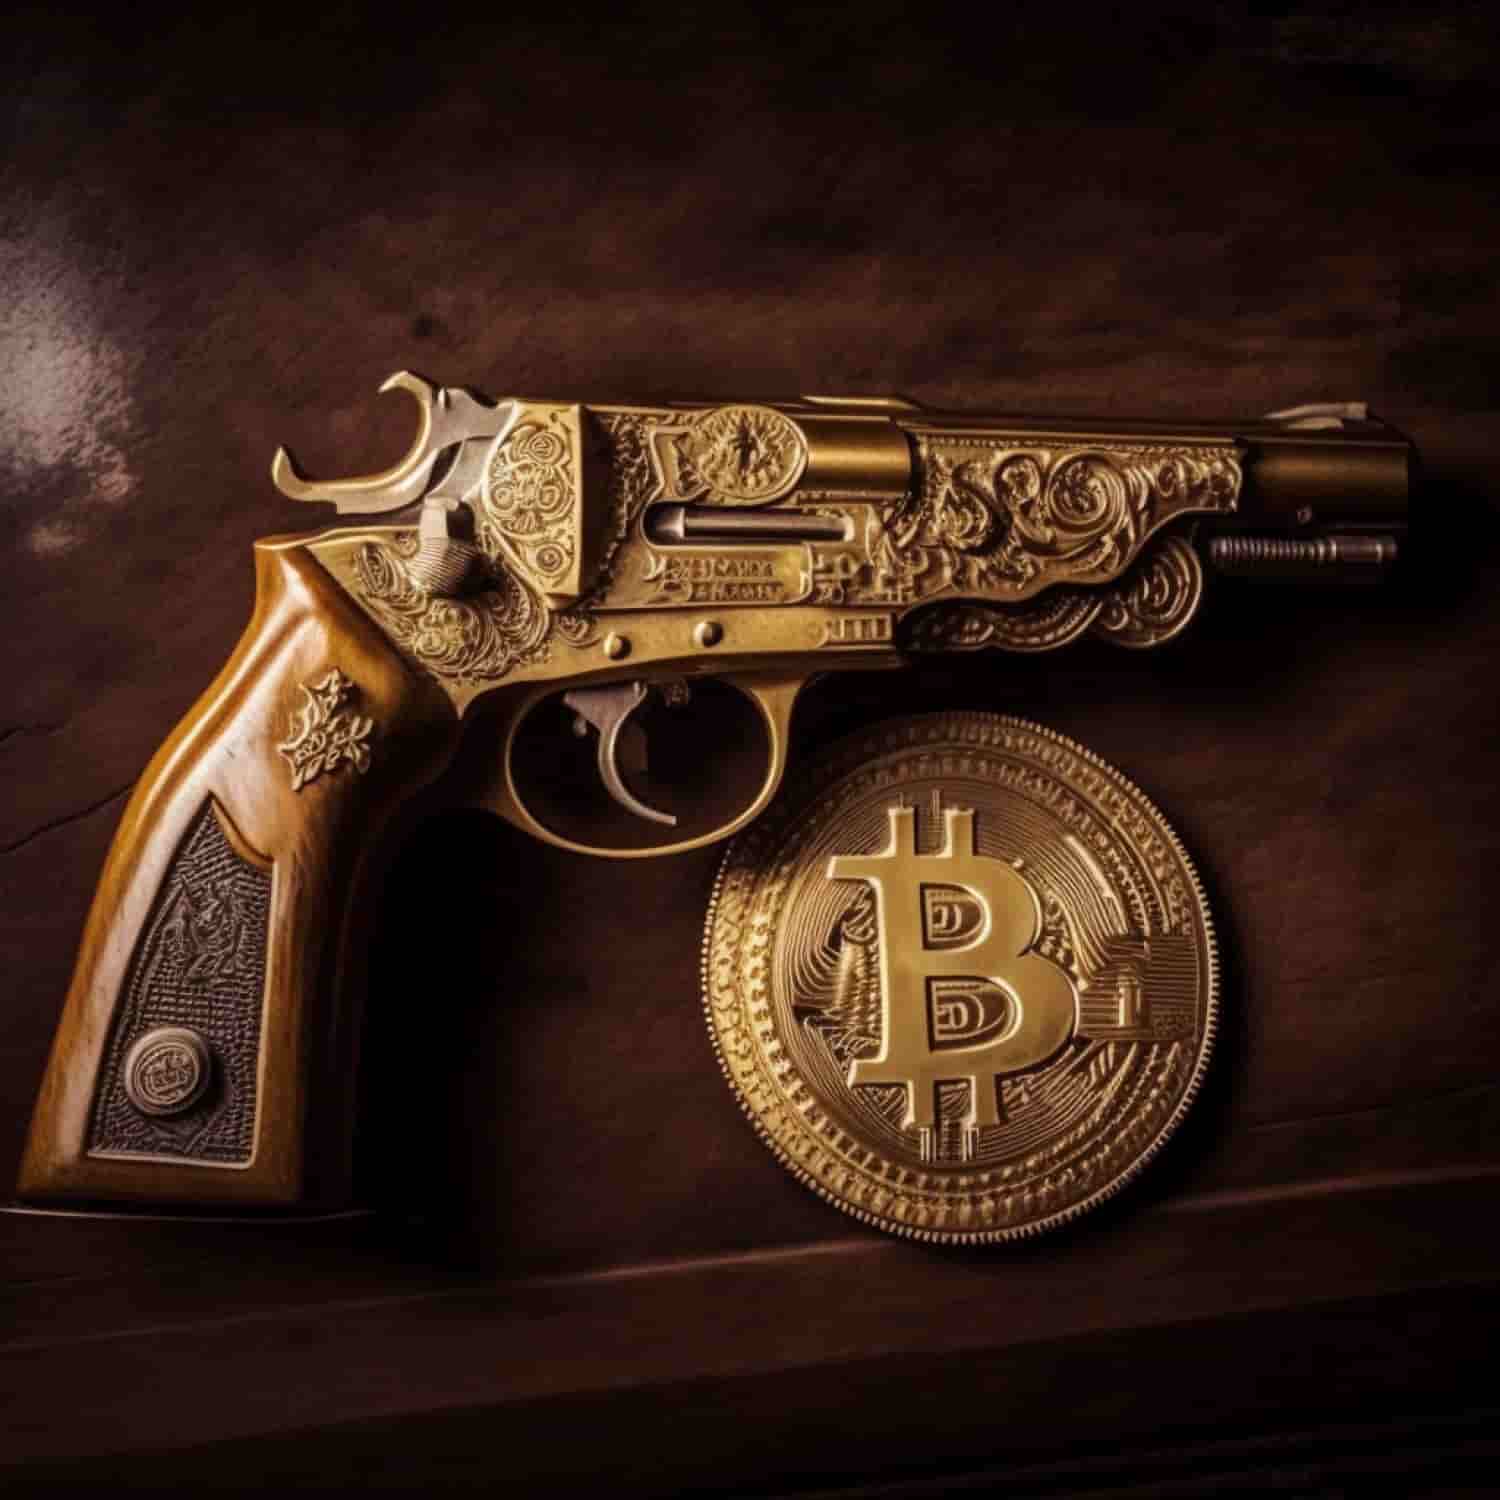 Maior evento sobre armas, Bitcoin e liberdade tem data marcada